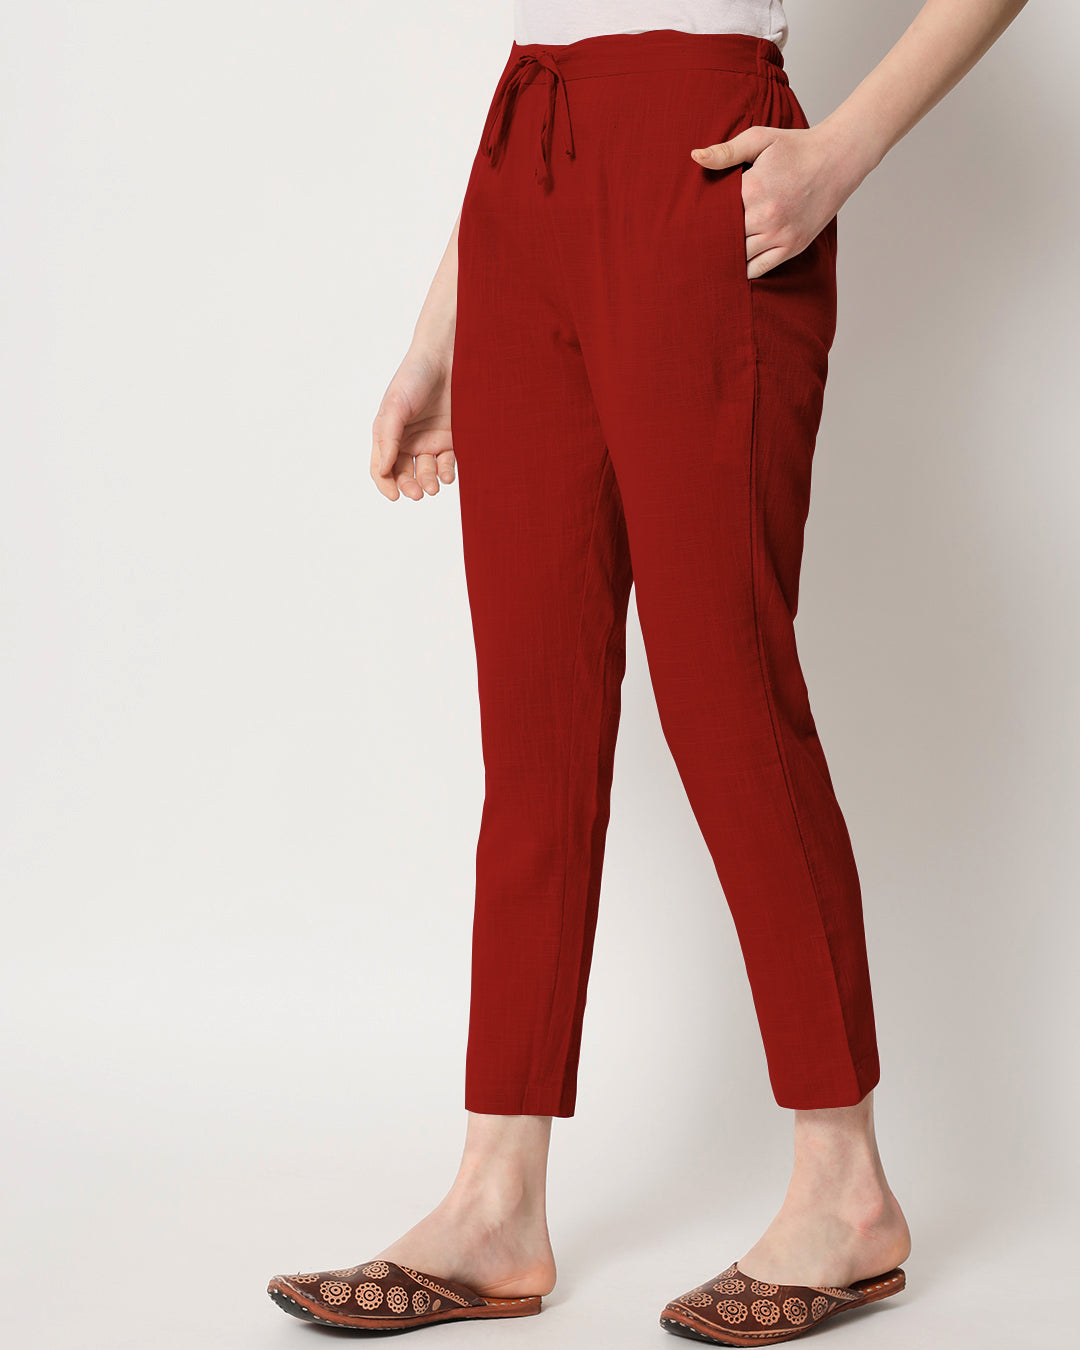 Combo: Black & Classic Red Cigarette Pants- Set of 2